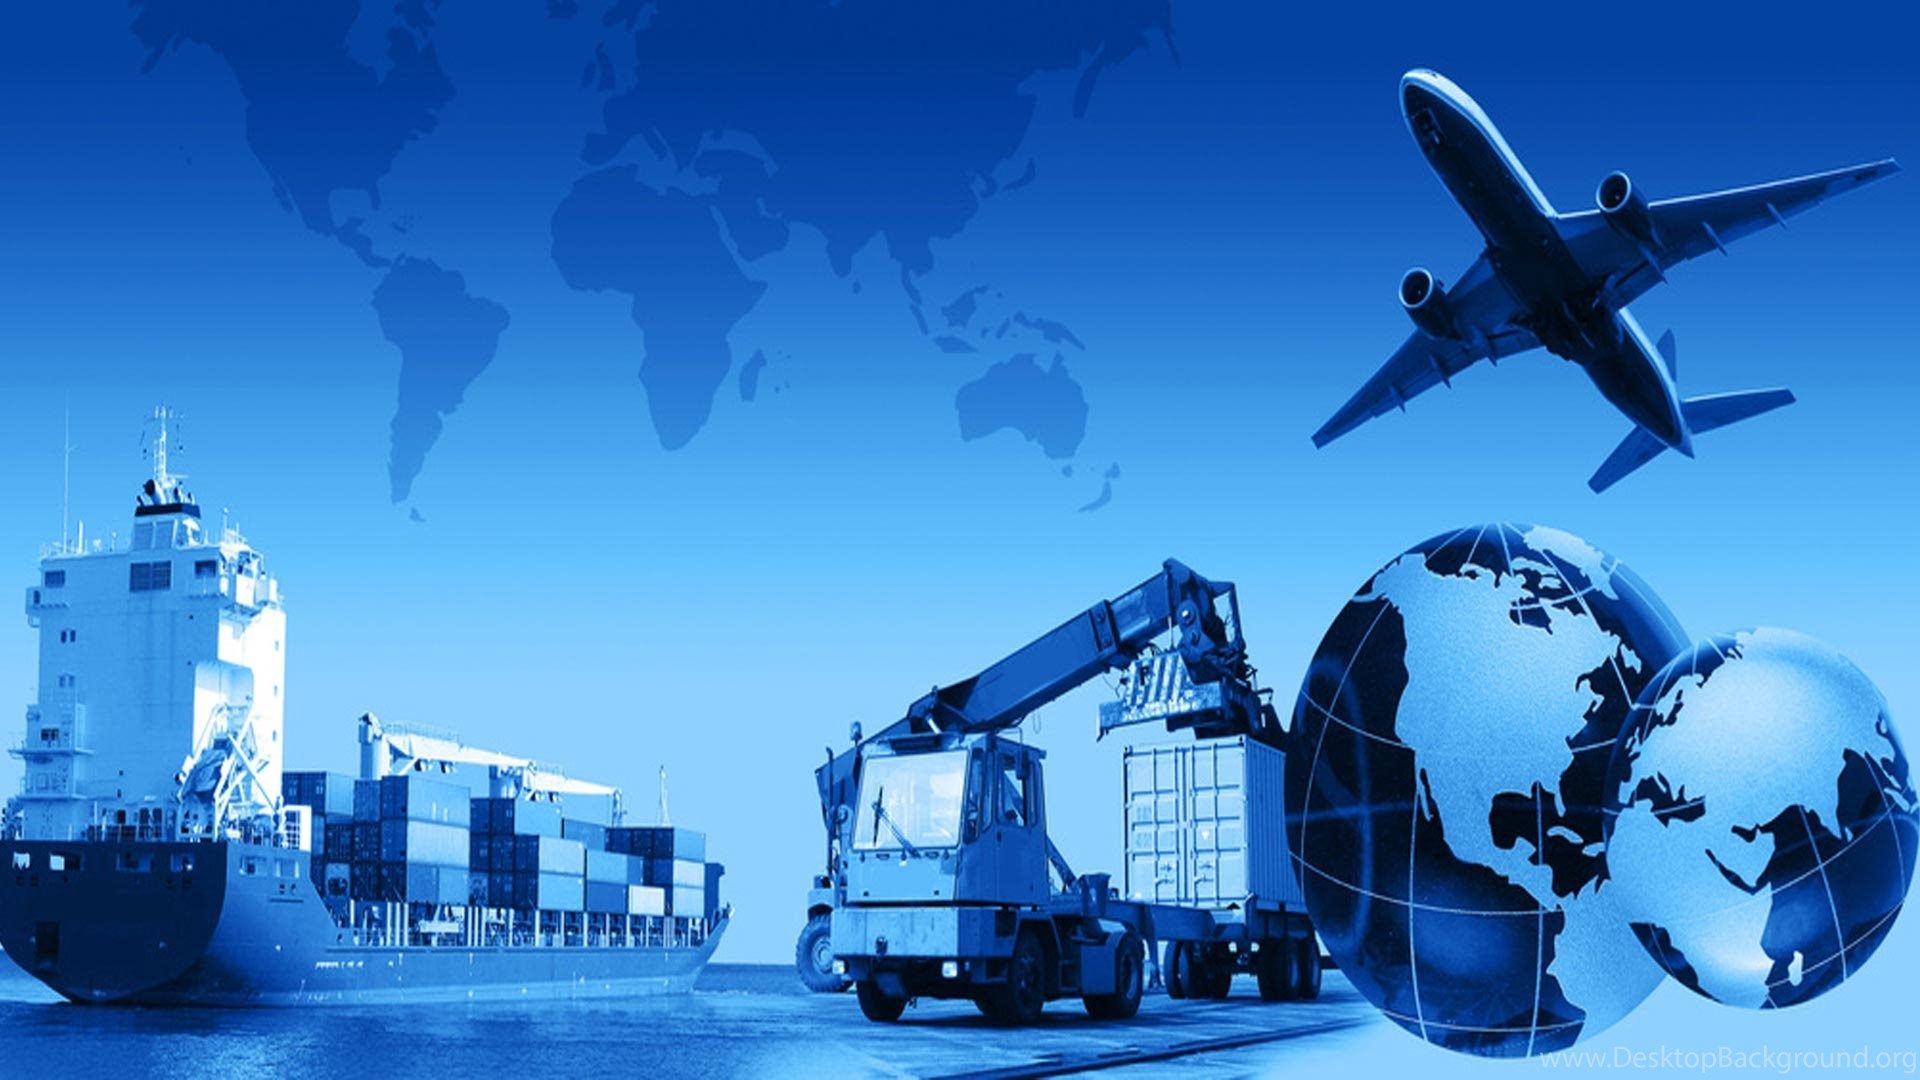 Wallpaper Services Logistics Warehousing Distribution With. Desktop Background